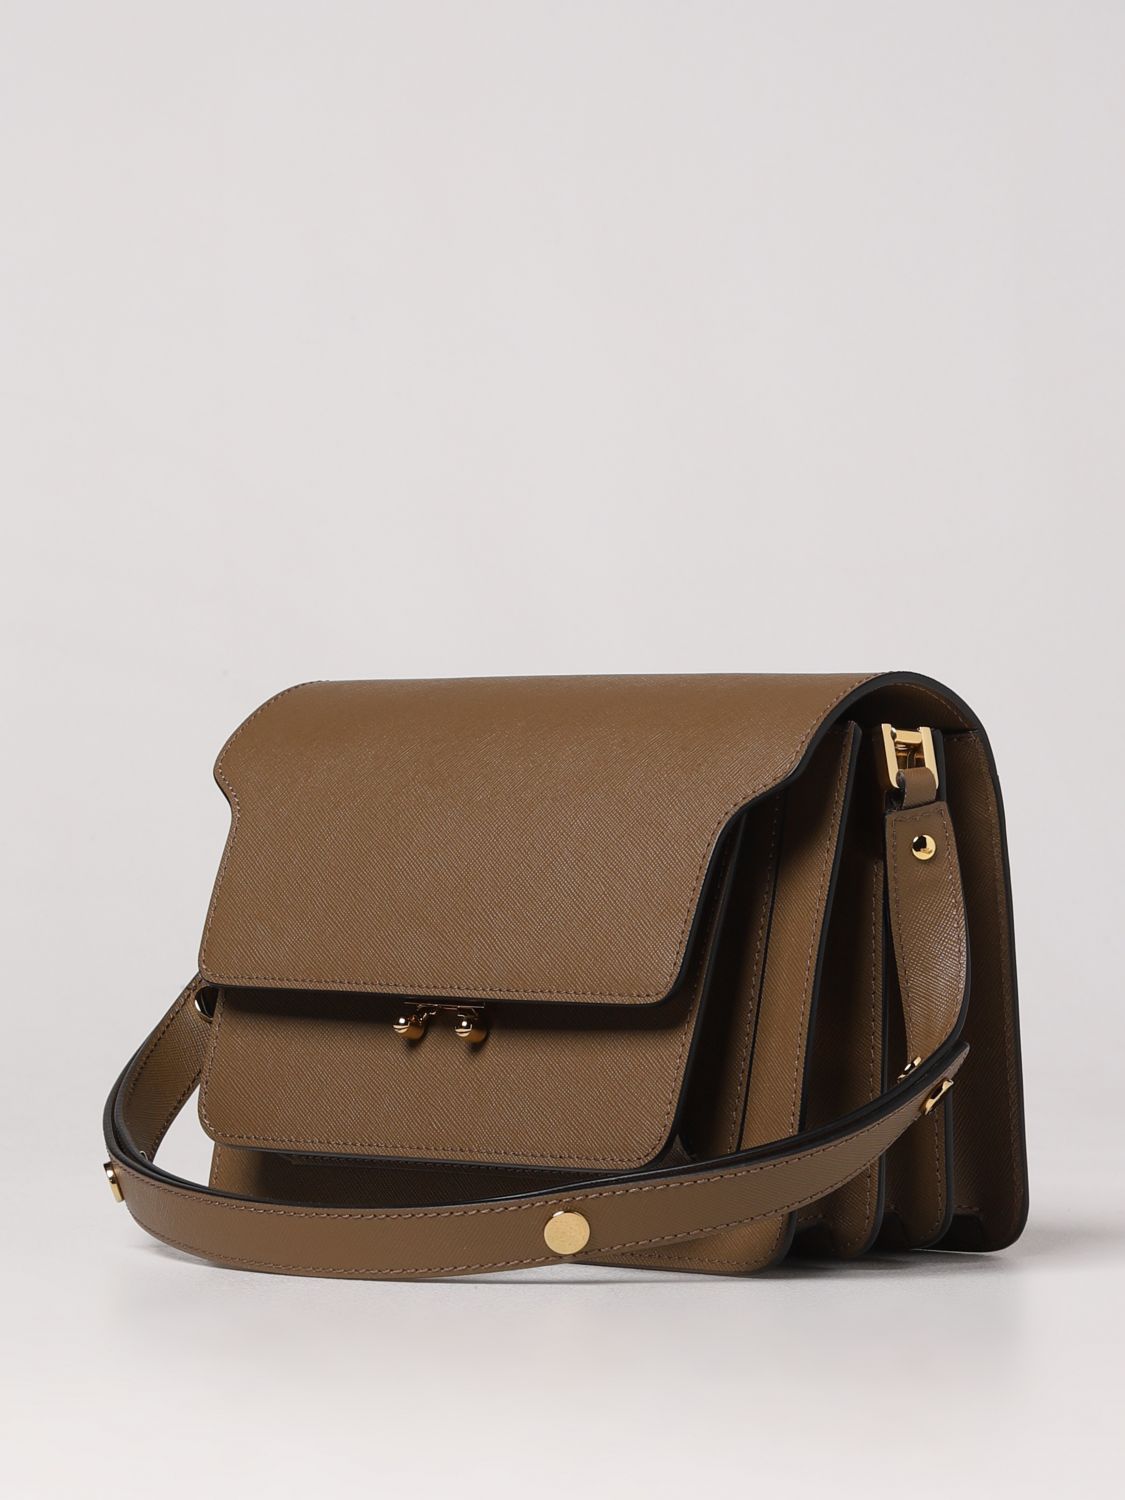 MARNI: Trunk bag in saffiano leathers - Tobacco  Marni shoulder bag  SBMP0121U0LV520 online at